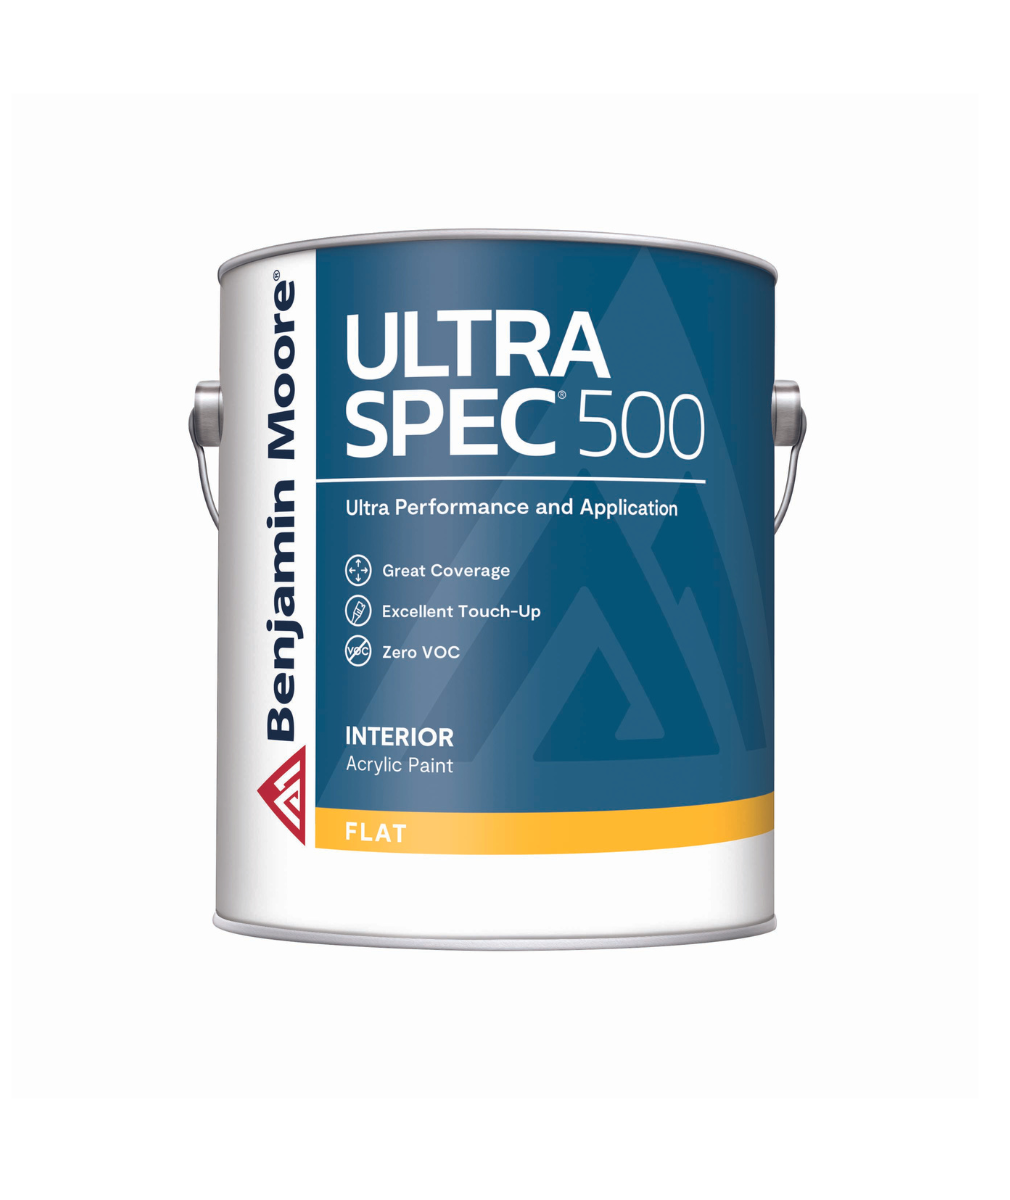 Benjamin Moore Ultra Spec 500 Eggshell Interior Paint available at JC Licht.